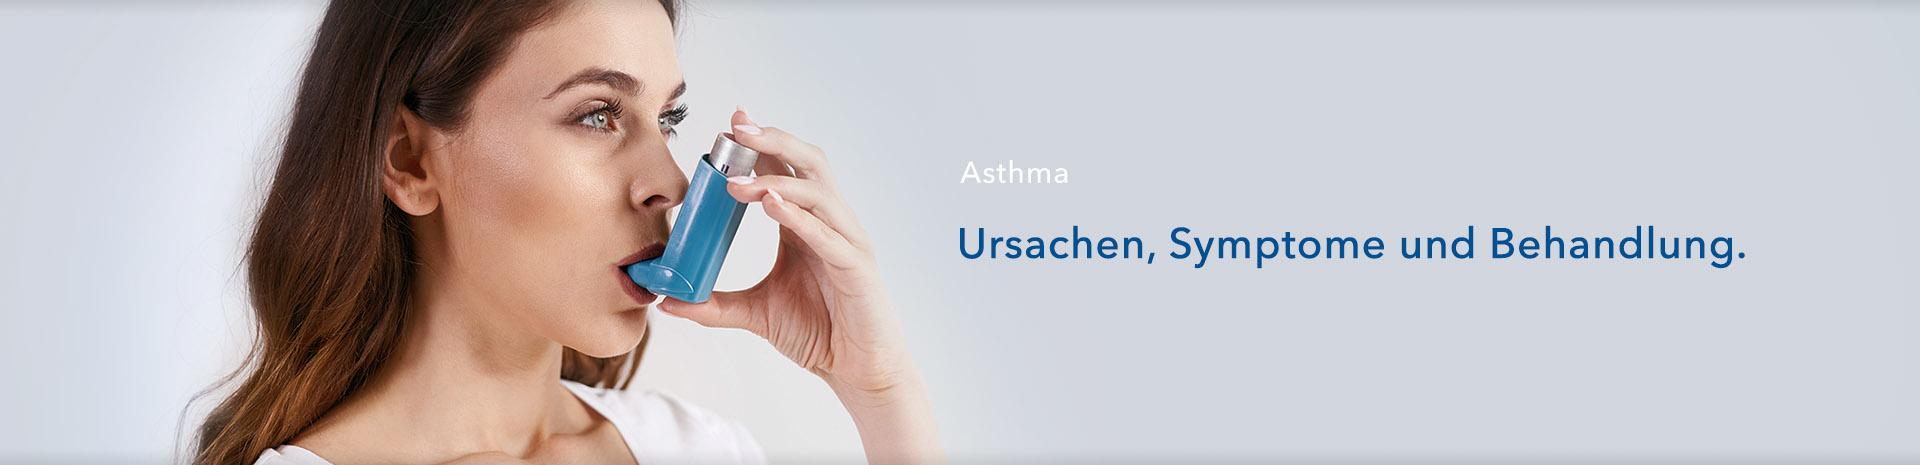 Ratgeber zum Thema Asthma bronchiale